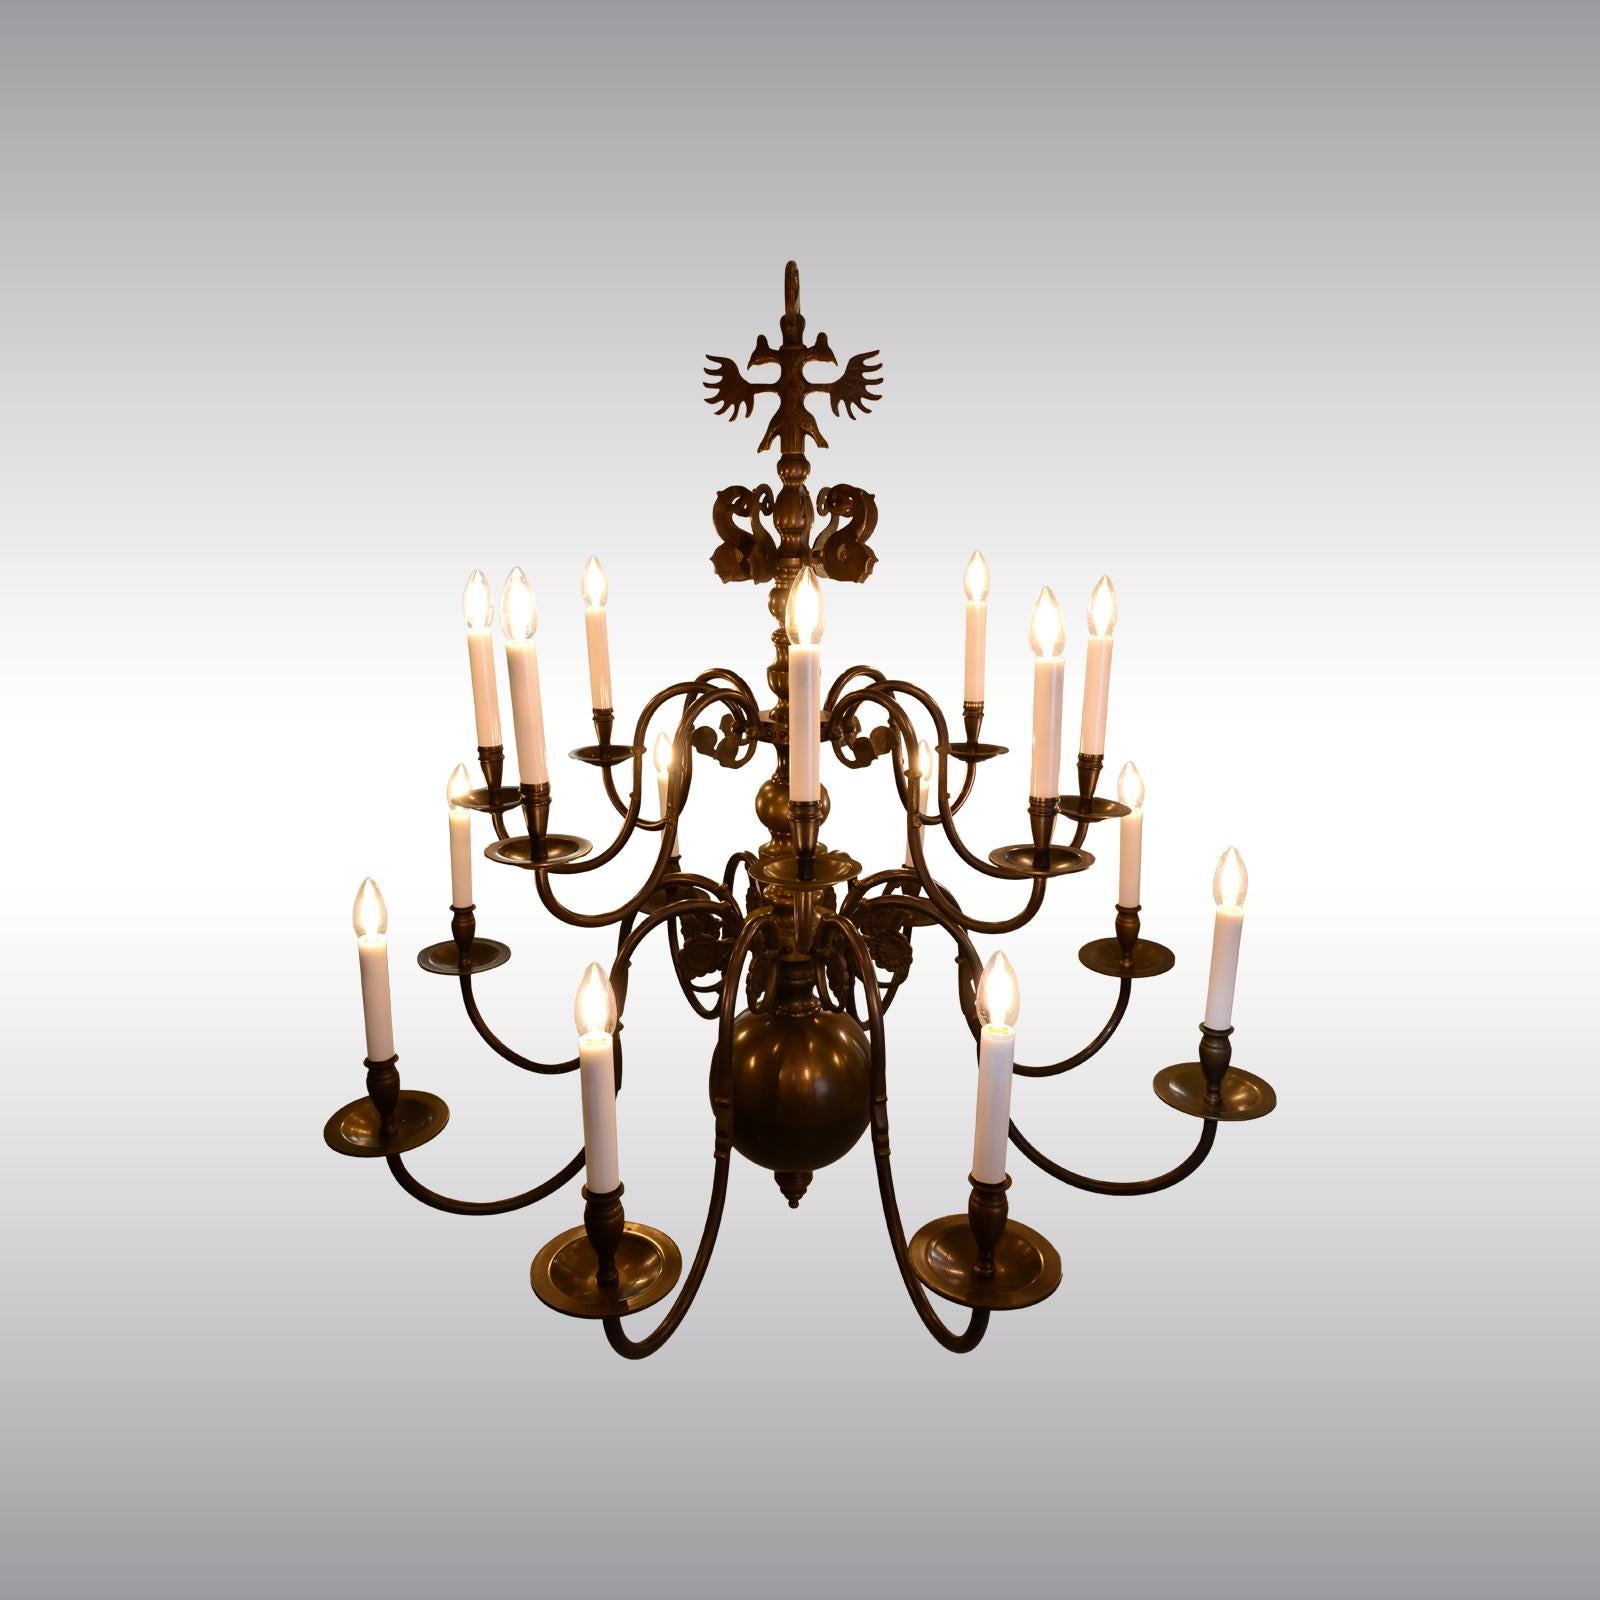 Elegant large Baroque-style chandelier.
Suitable for US.